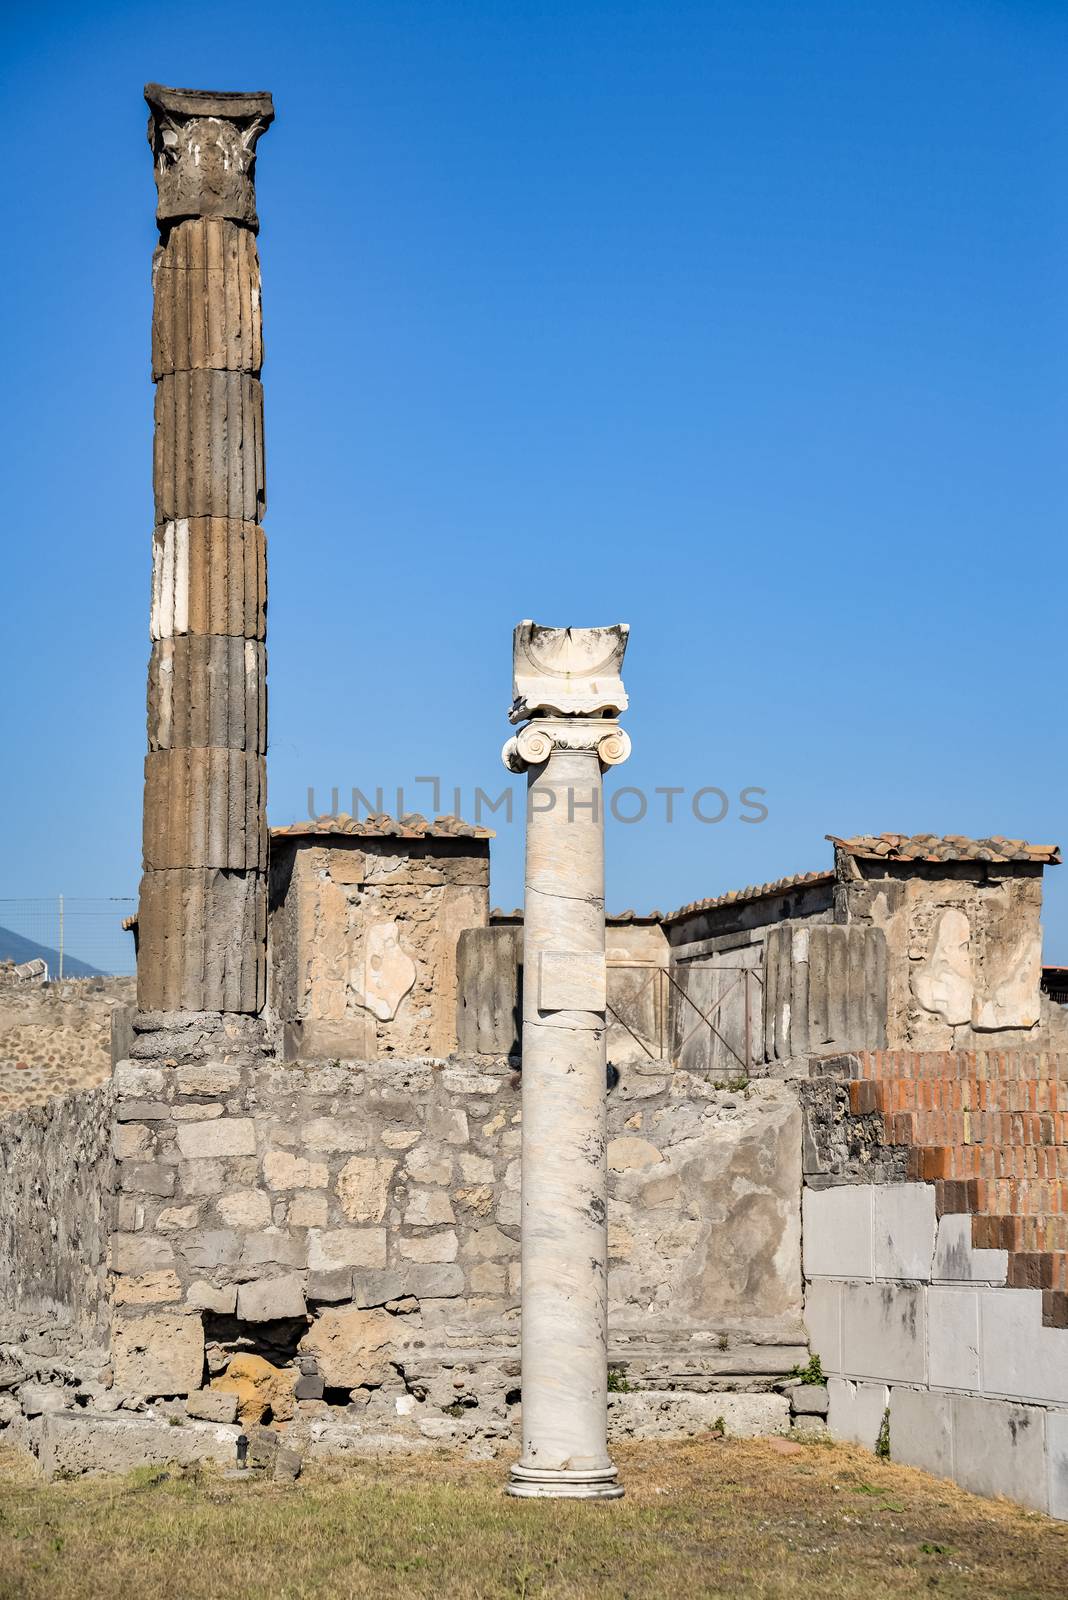 Lost city of Pompeii by edella